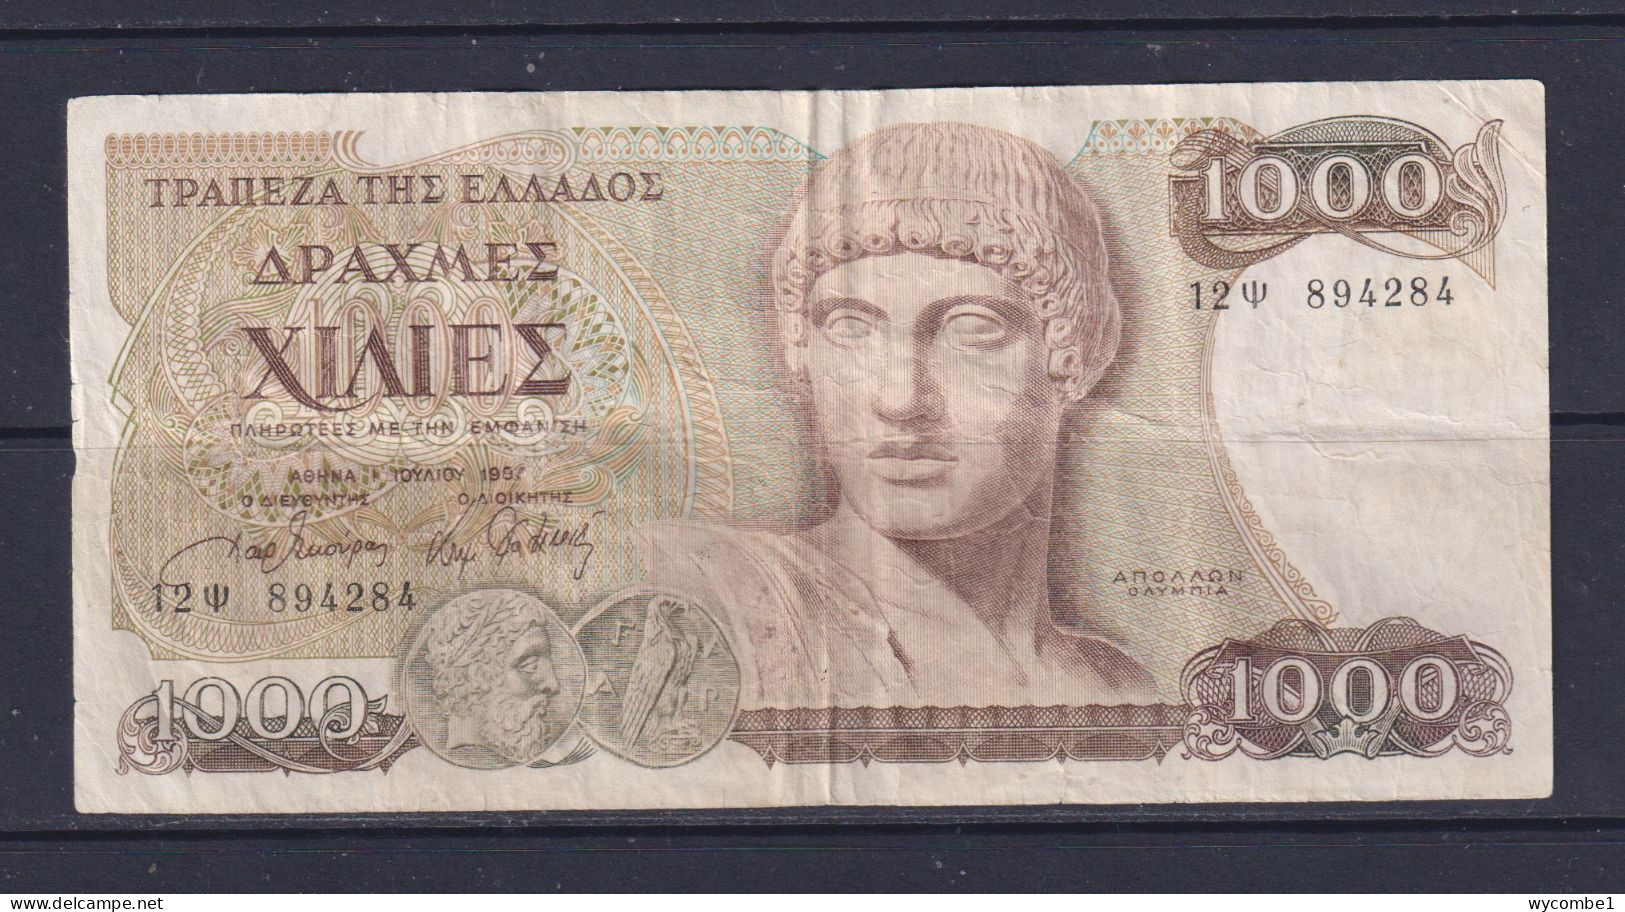 GREECE - 1987 1000 Drachma Circulated Banknote - Greece